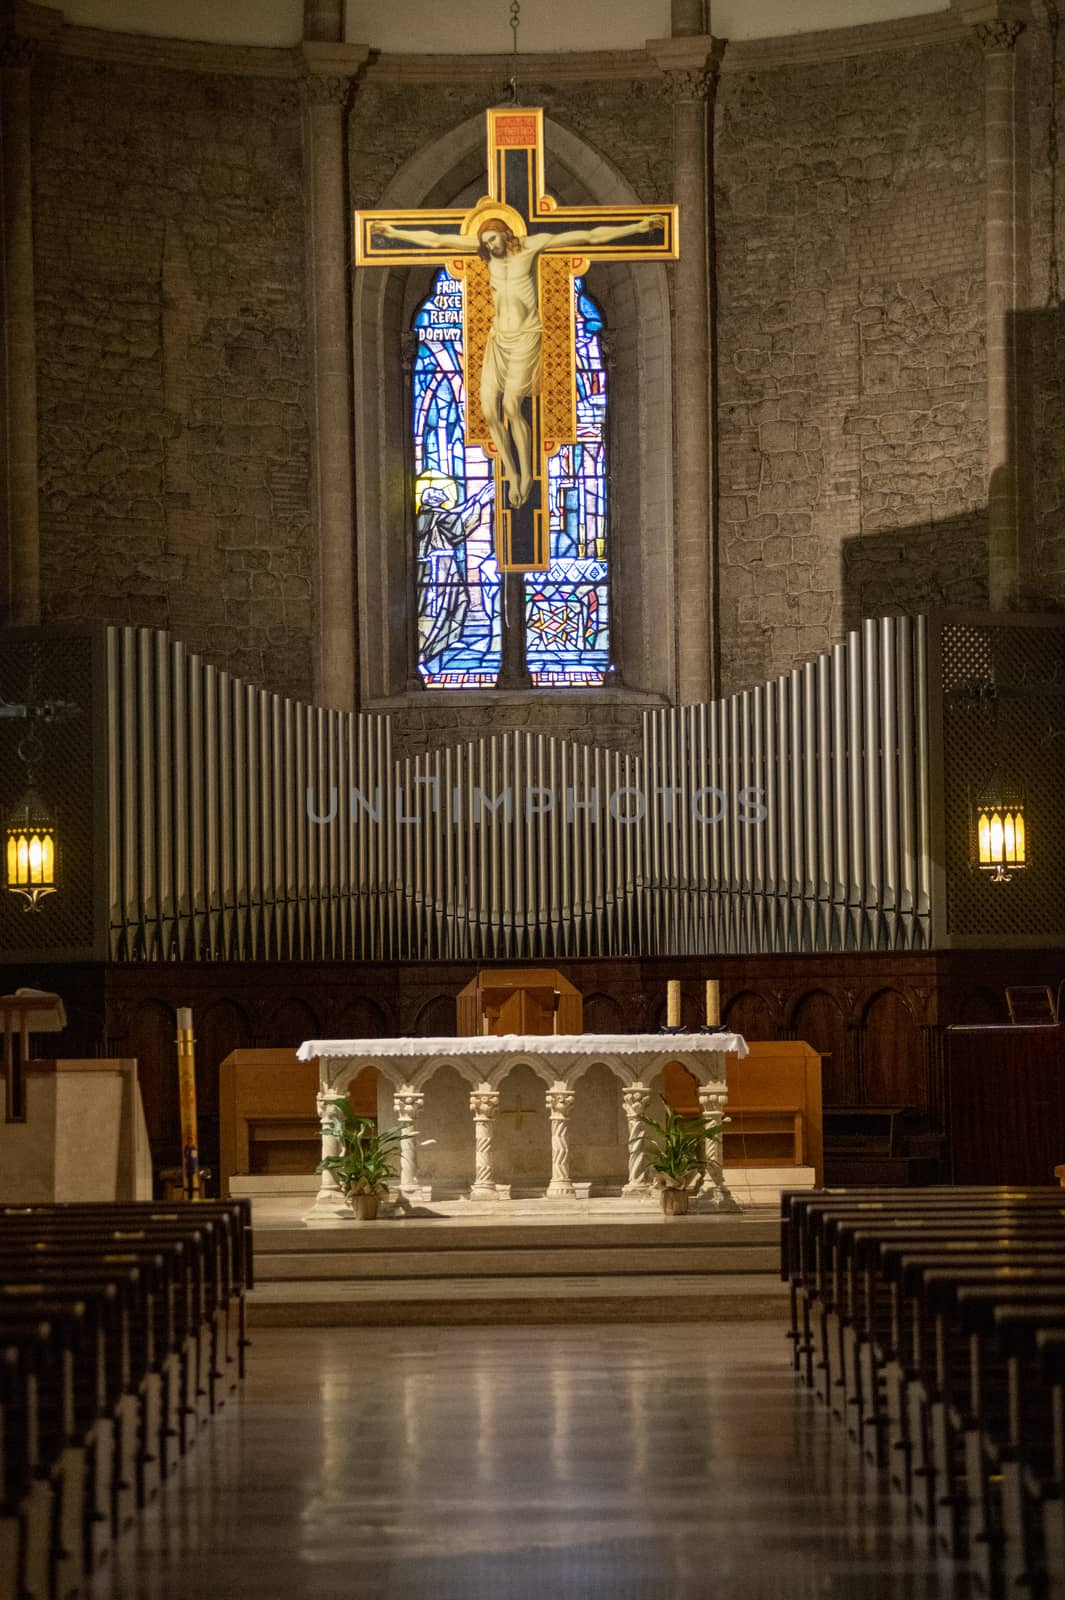 terni,italy october 23 2020:altar placed in the church of San Francesco